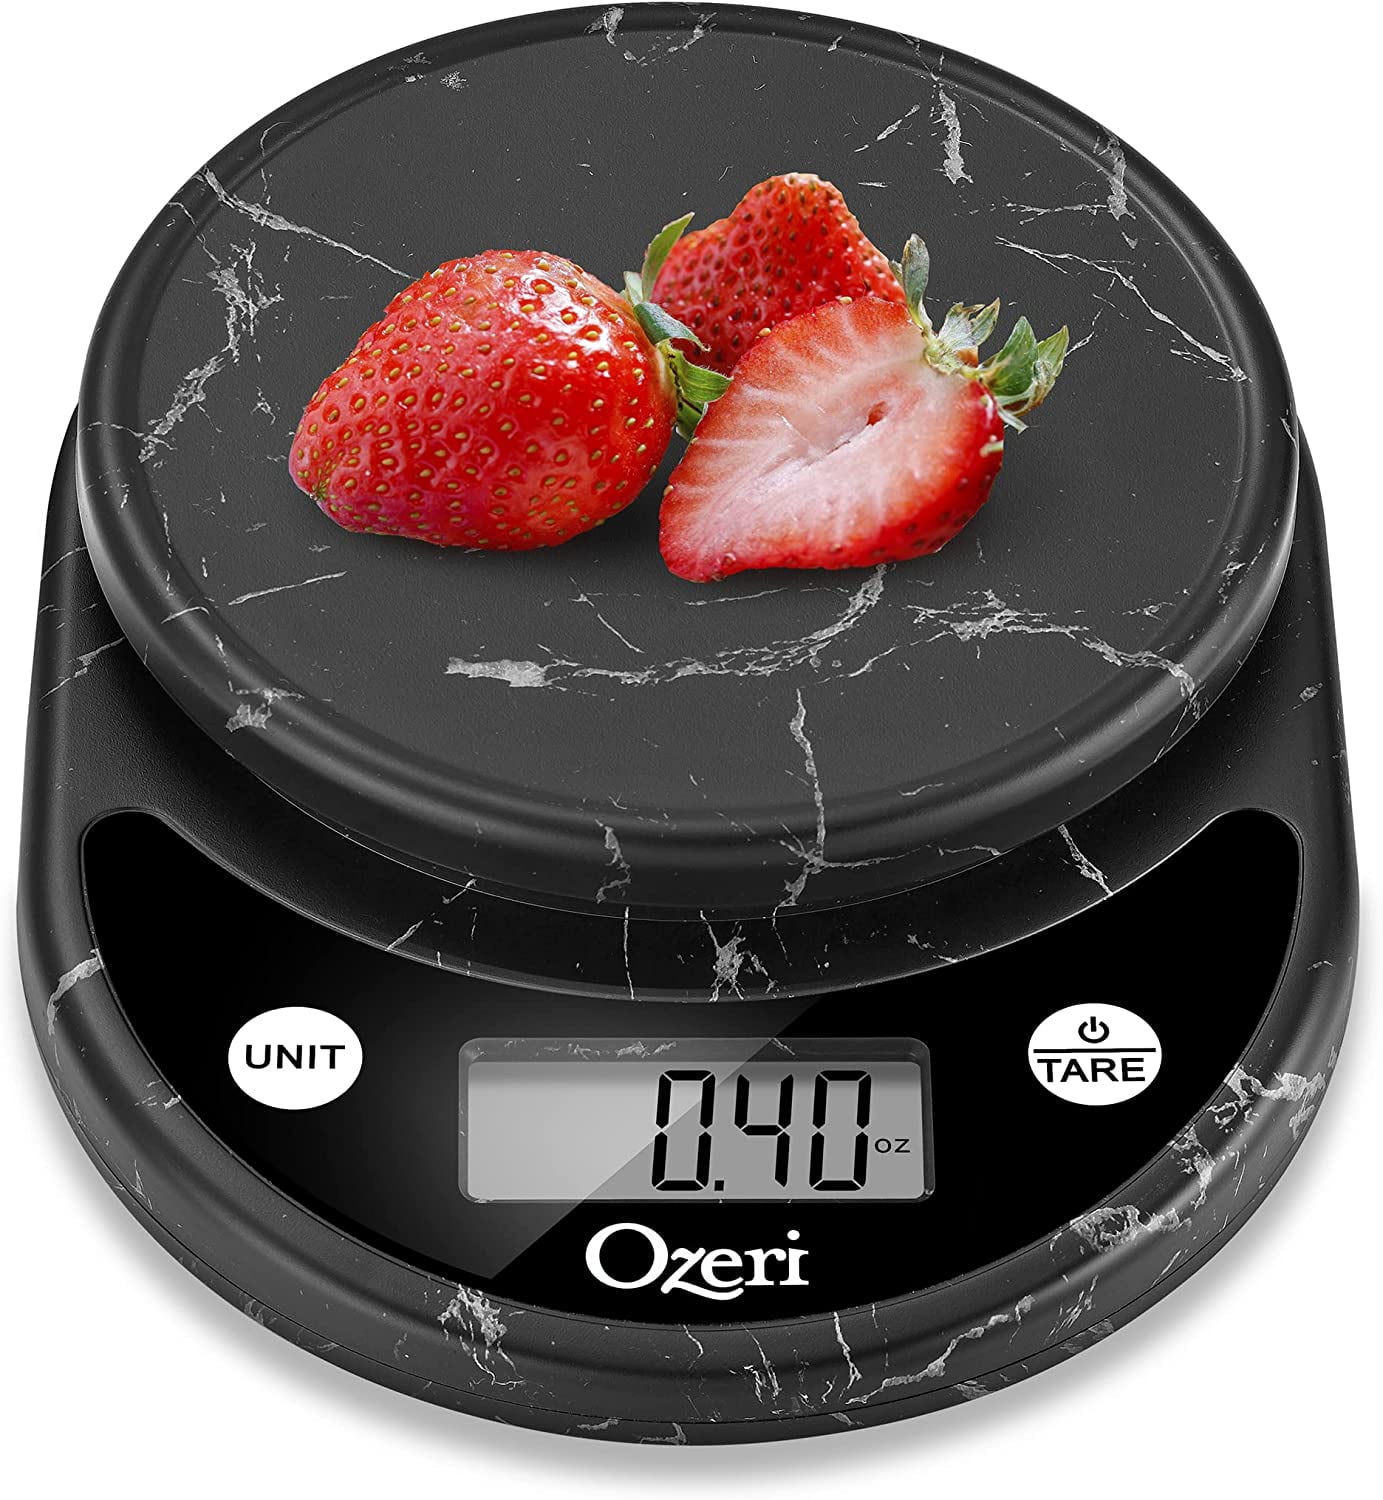 Ozeri ZK12-R Pro Digital Kitchen Food Scale, 1g/12 lb, Red Engine